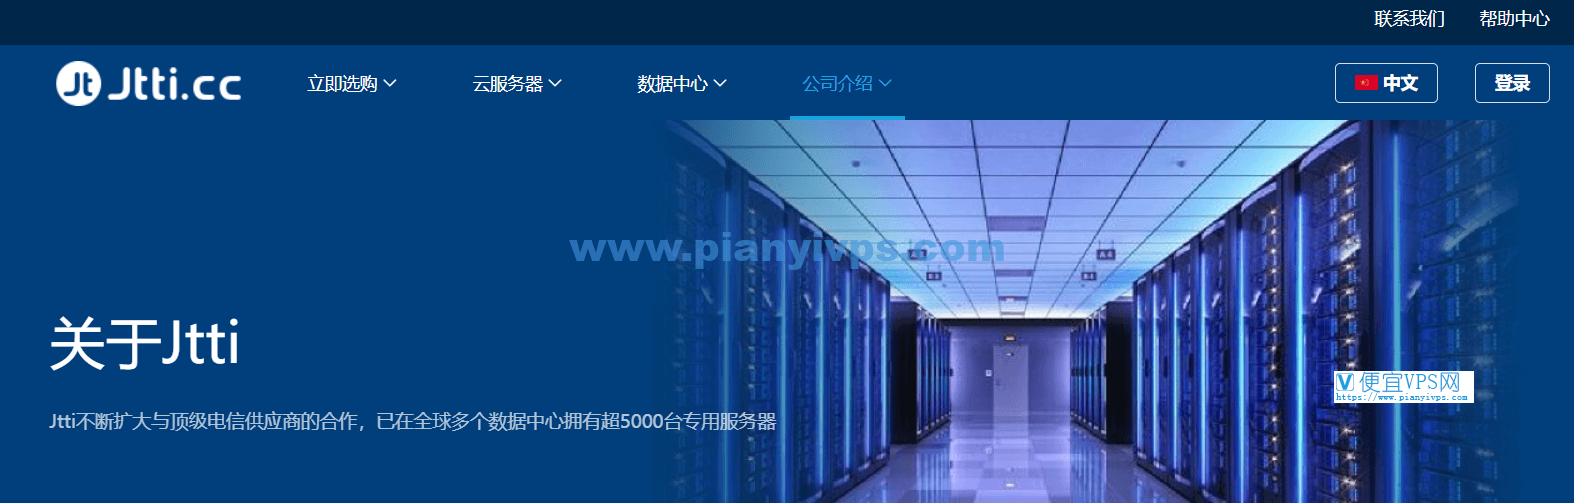 Jtti：云服务器 2.5 折月付 $2.4 起，CN2 线路，不限流量，原生 IP，可免费更换 IP，可选香港/美国/新加坡-QQ1000资源网